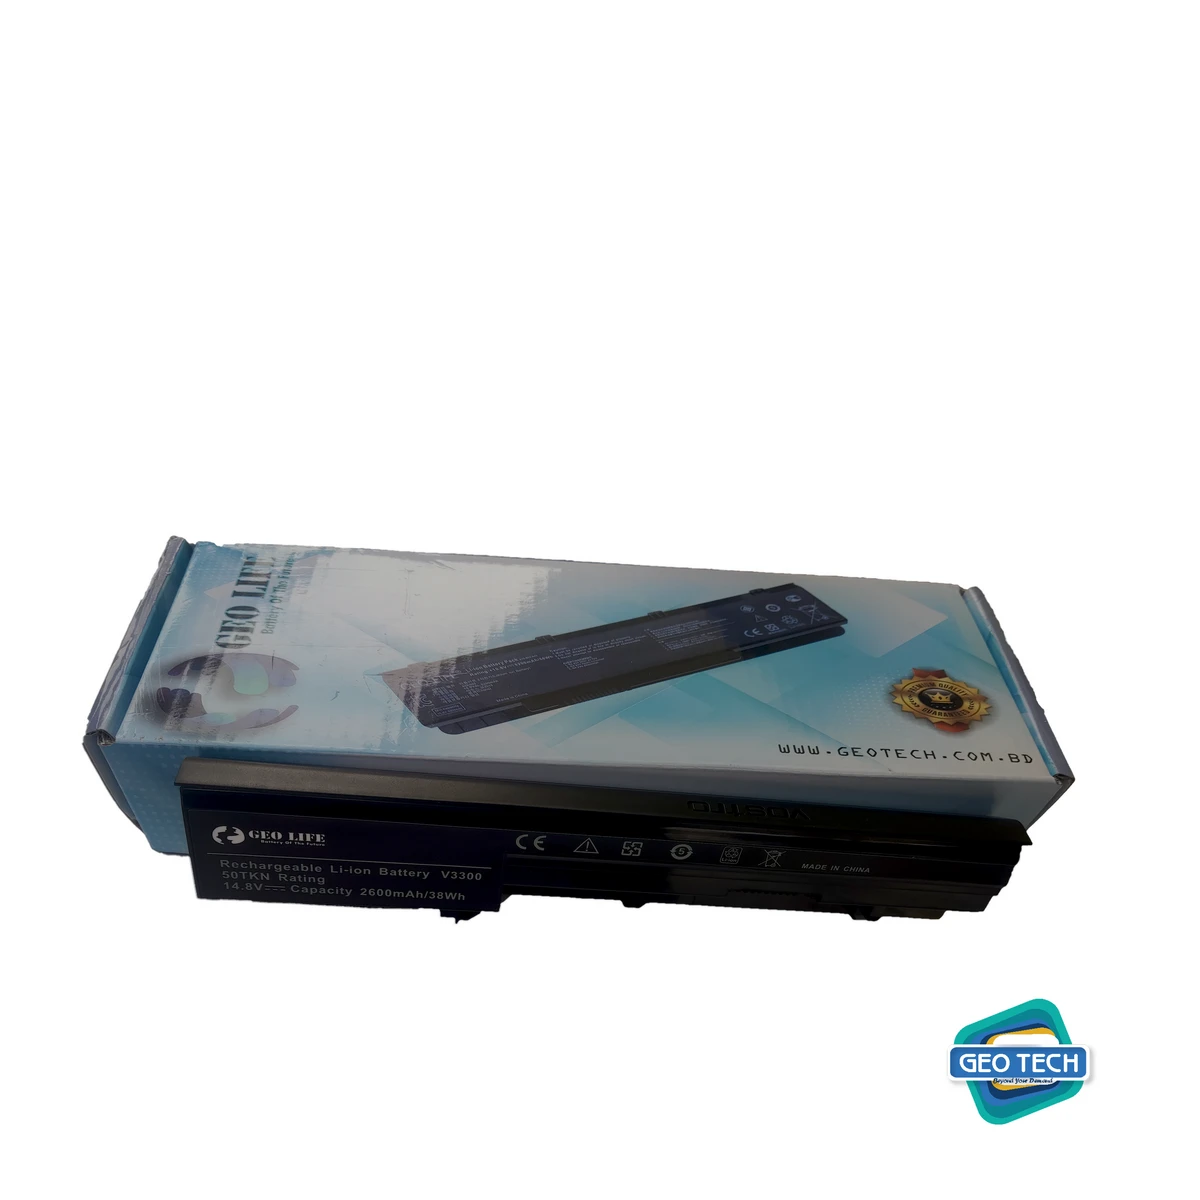 v3300 Laptop Battery for Dell Vostro 3300, Dell Vostro 3350, P/N: 7W5X09C 312-1007 7W5X0 50TKN NF52T GRNX5 0XXDG0 451-1135